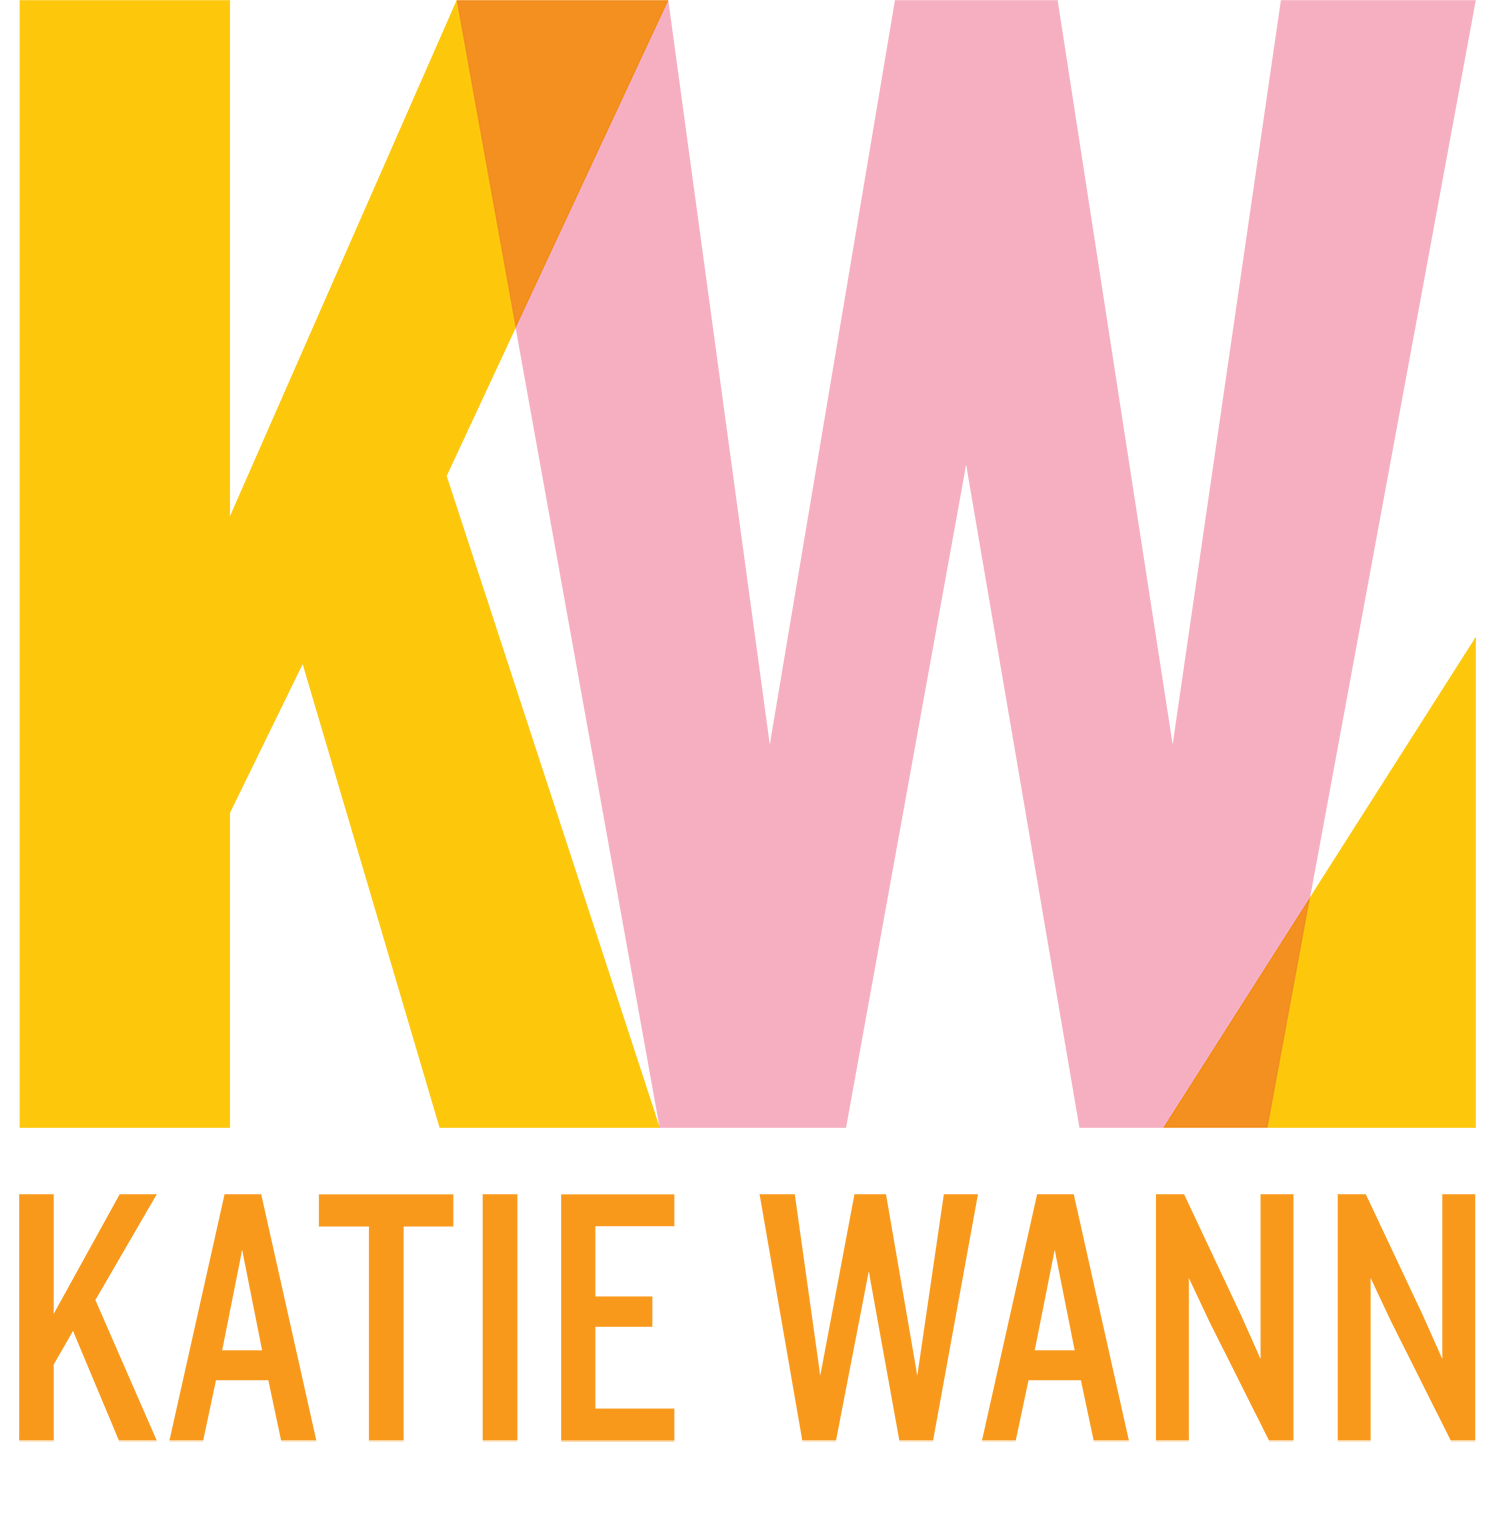 Katie Wann